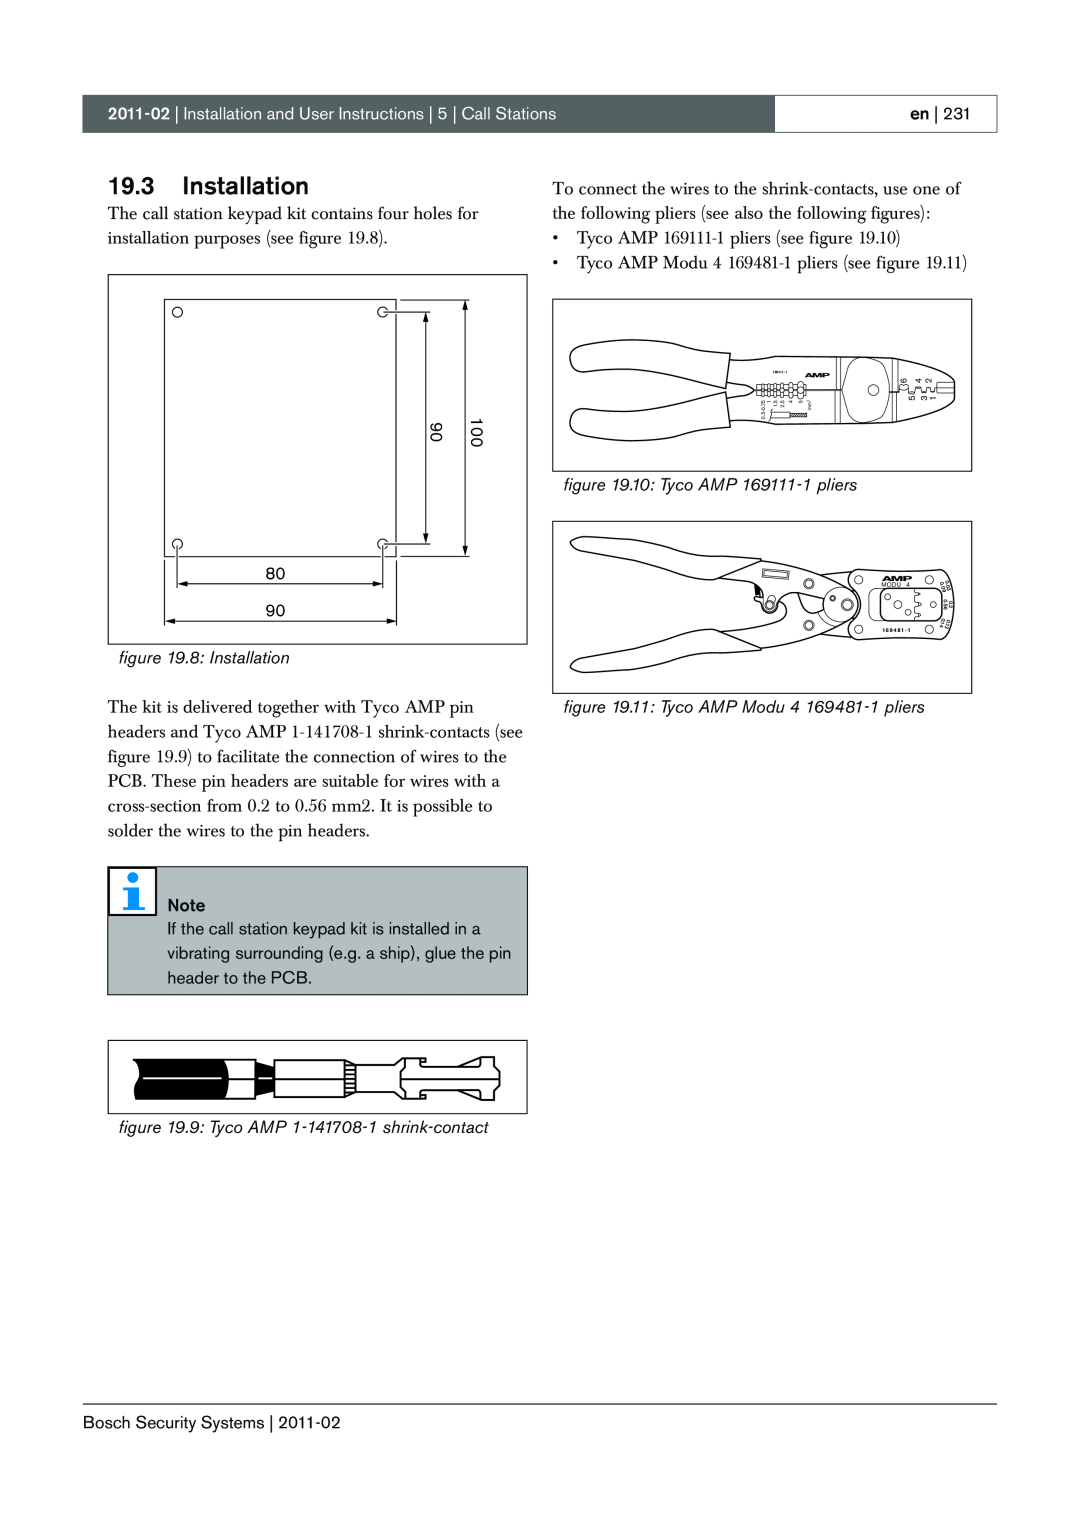 Bosch Appliances 3.5 manual 8: Installation, 10: Tyco AMP 169111-1pliers, 11: Tyco AMP Modu 4 169481-1pliers 